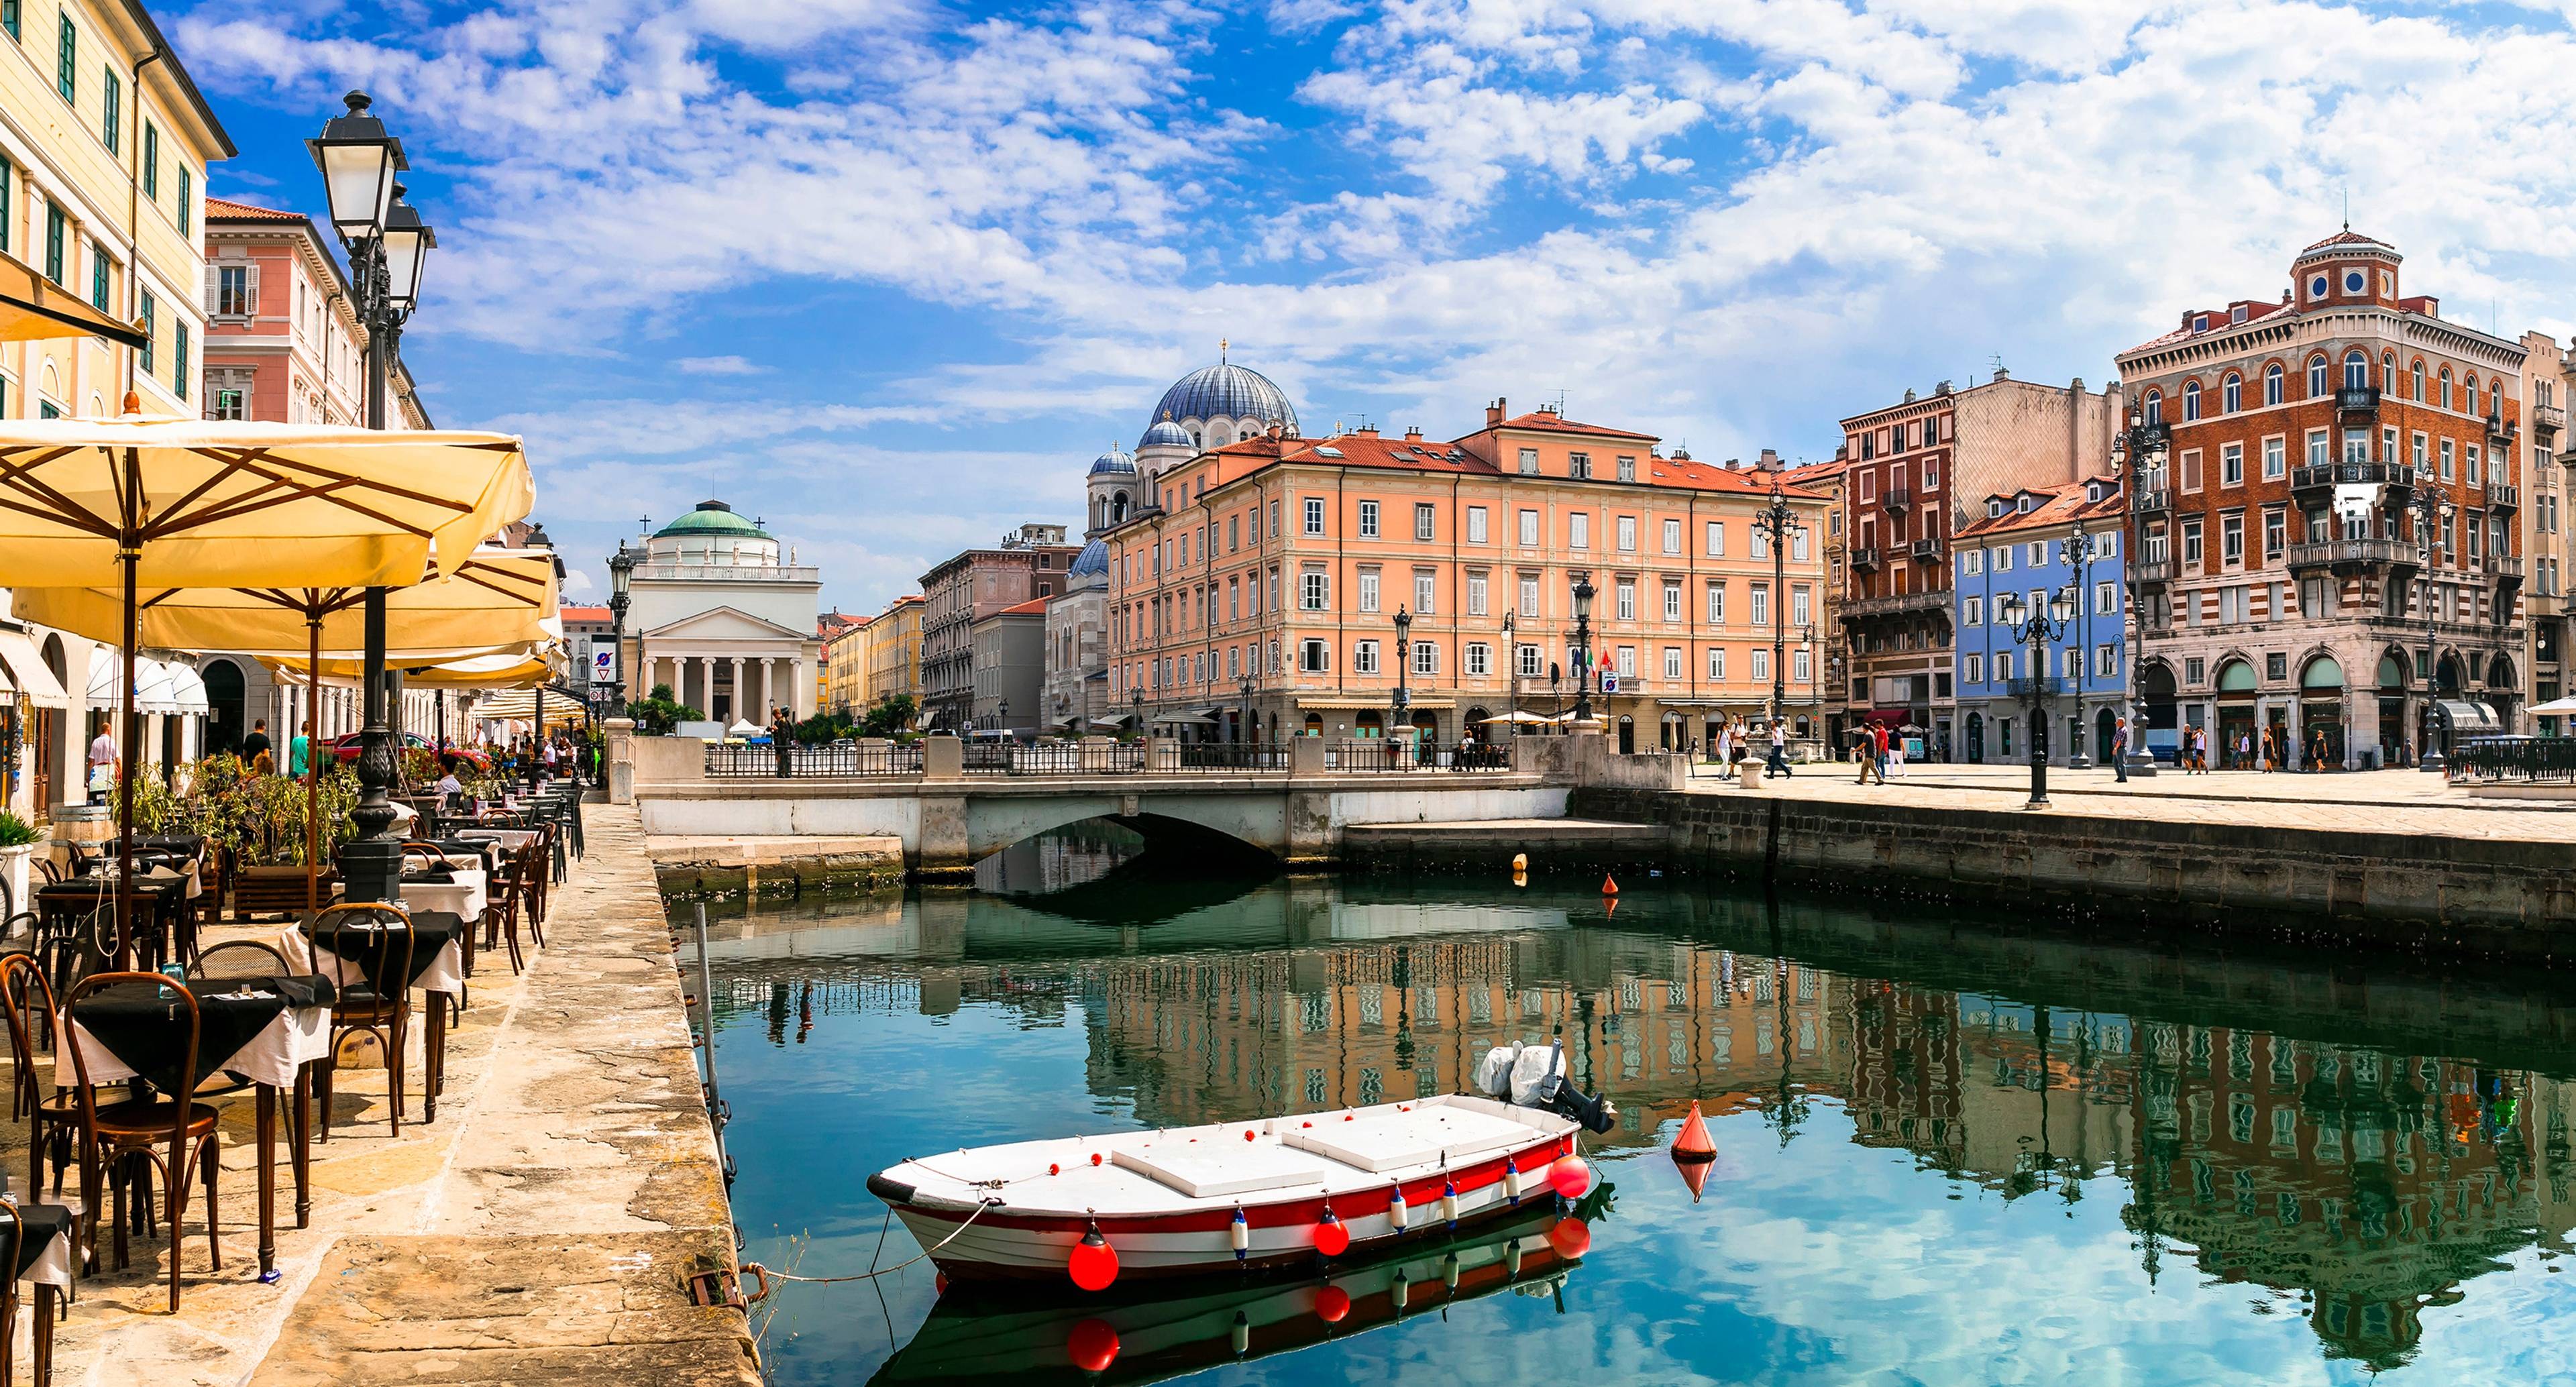 La bellissima città di Trieste